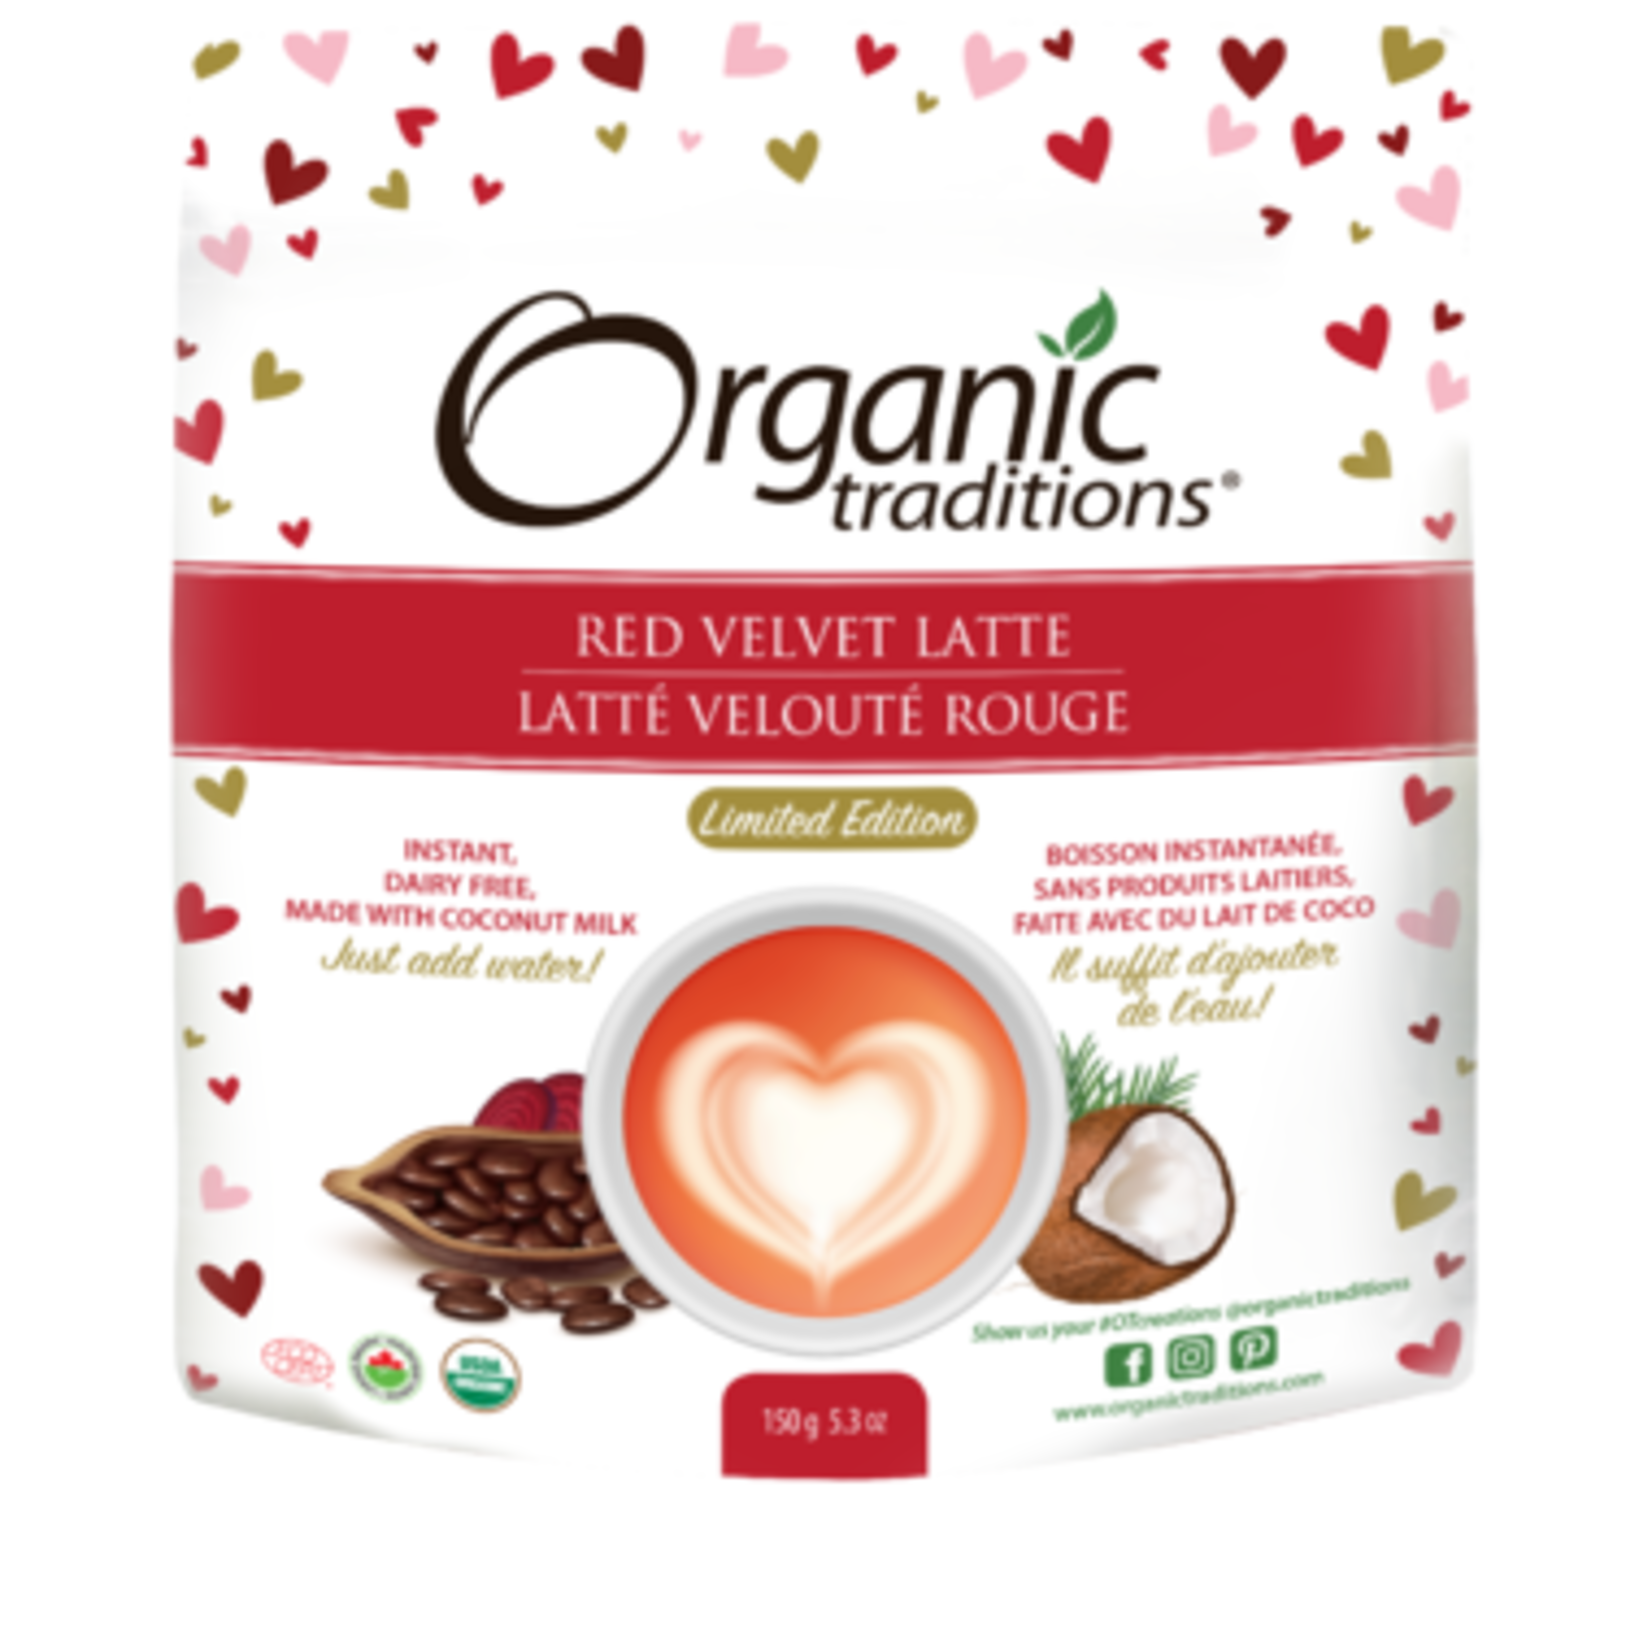 Organic Traditions Organic Traditions Red Velvet Latte 150g